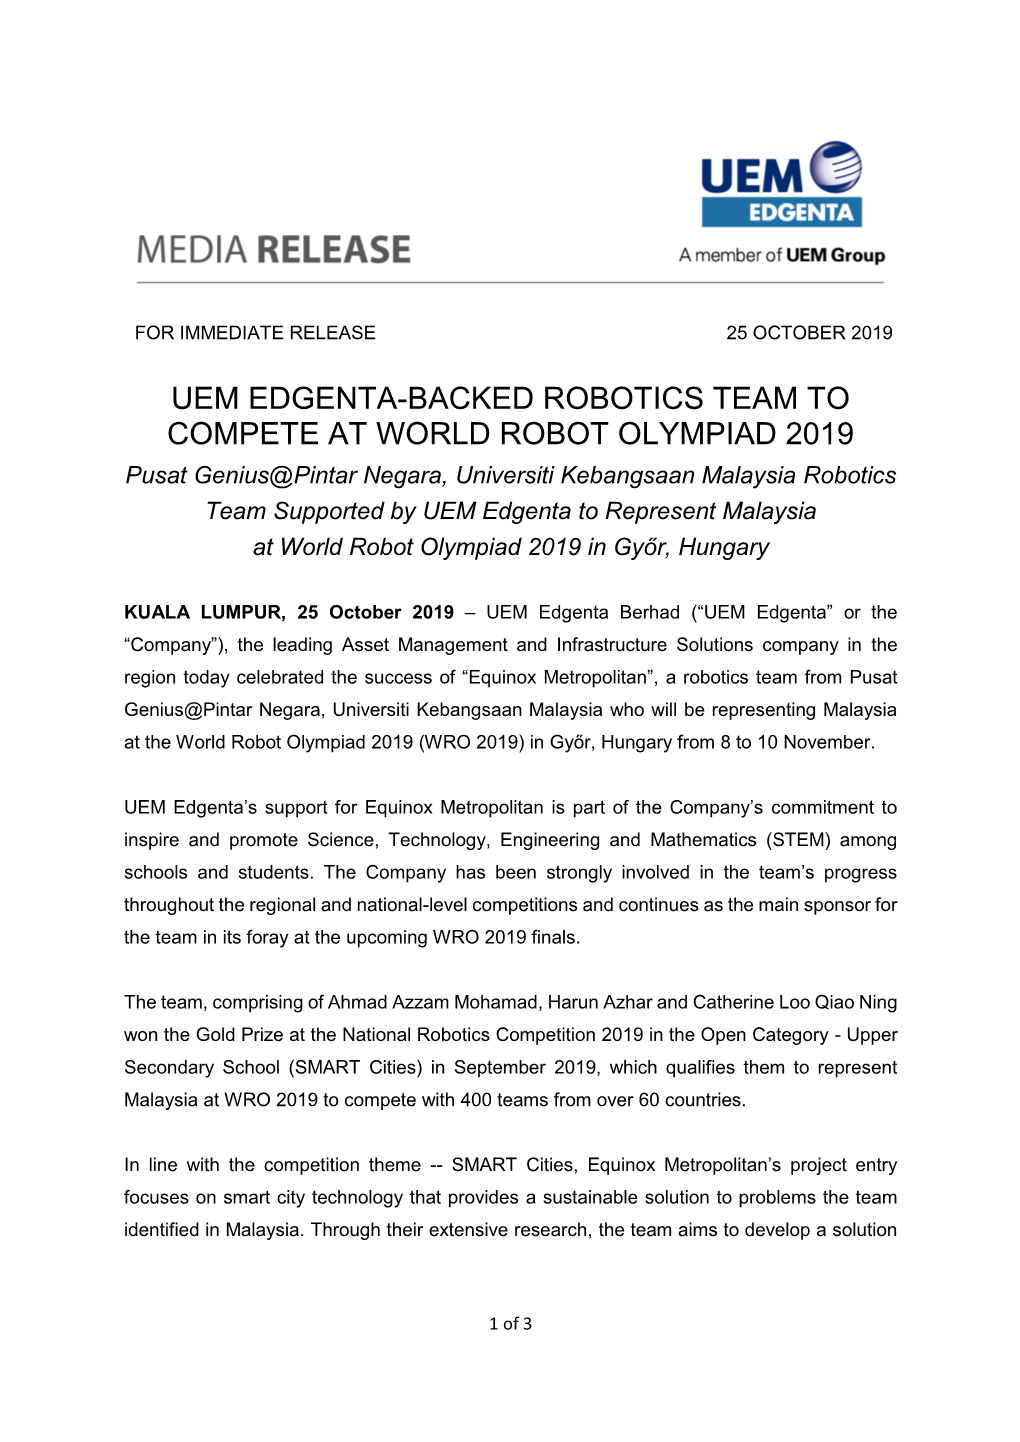 Uem Edgenta-Backed Robotics Team to Compete at World Robot Olympiad 2019